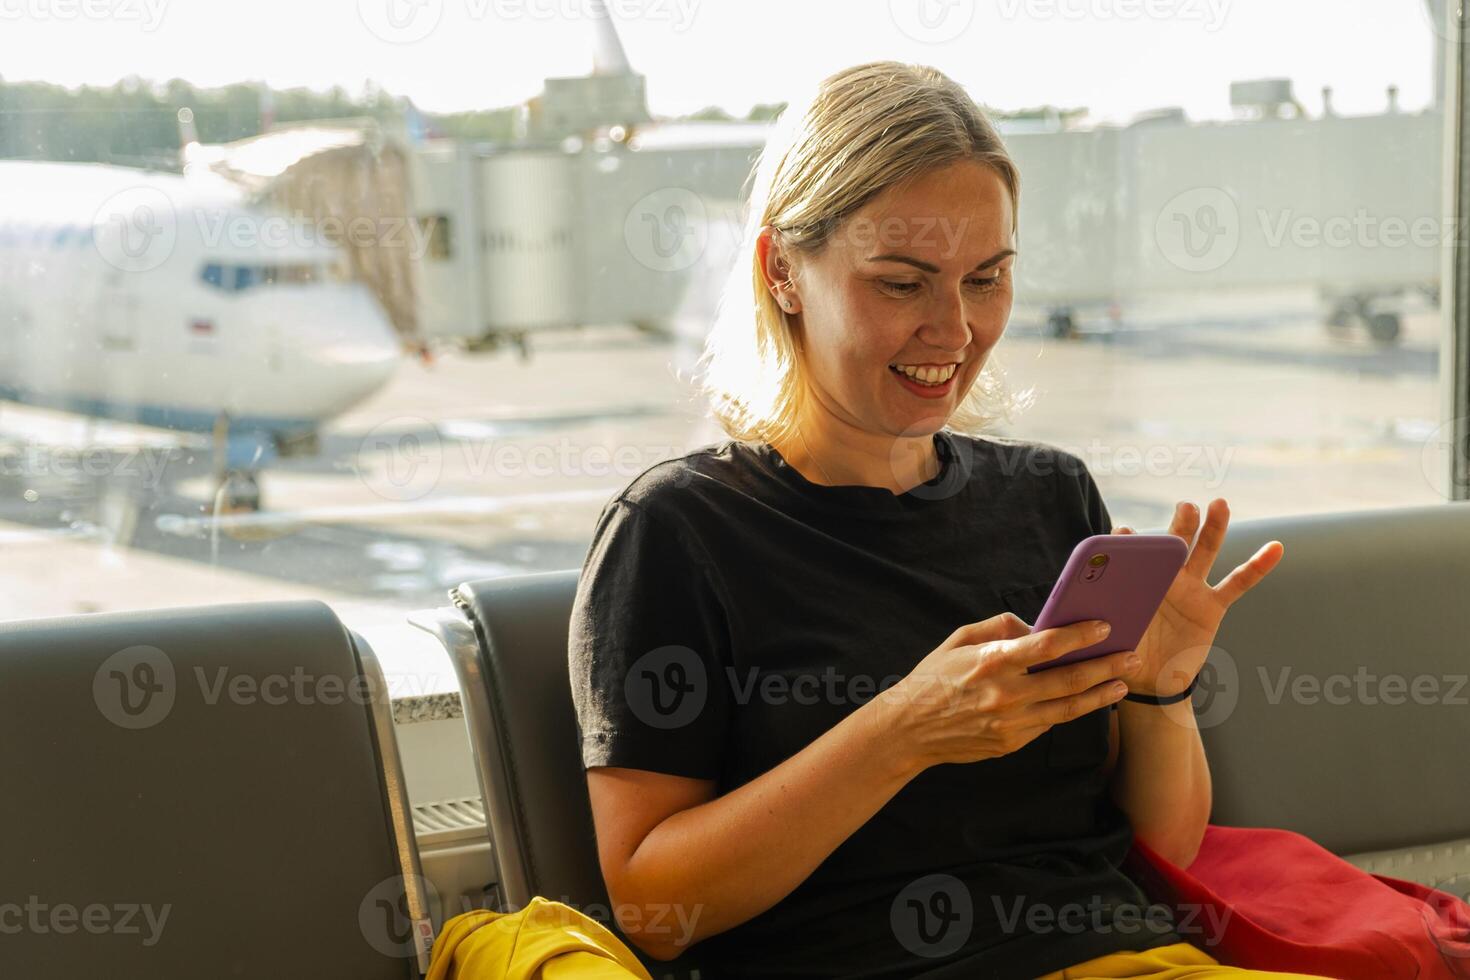 aeropuerto Terminal. mujer esperando para vuelo utilizando teléfono inteligente niña con célula teléfono en aeropuerto surf Internet social medios de comunicación aplicaciones de viaje hembra en embarque salón de aerolínea centro. de viaje niña foto